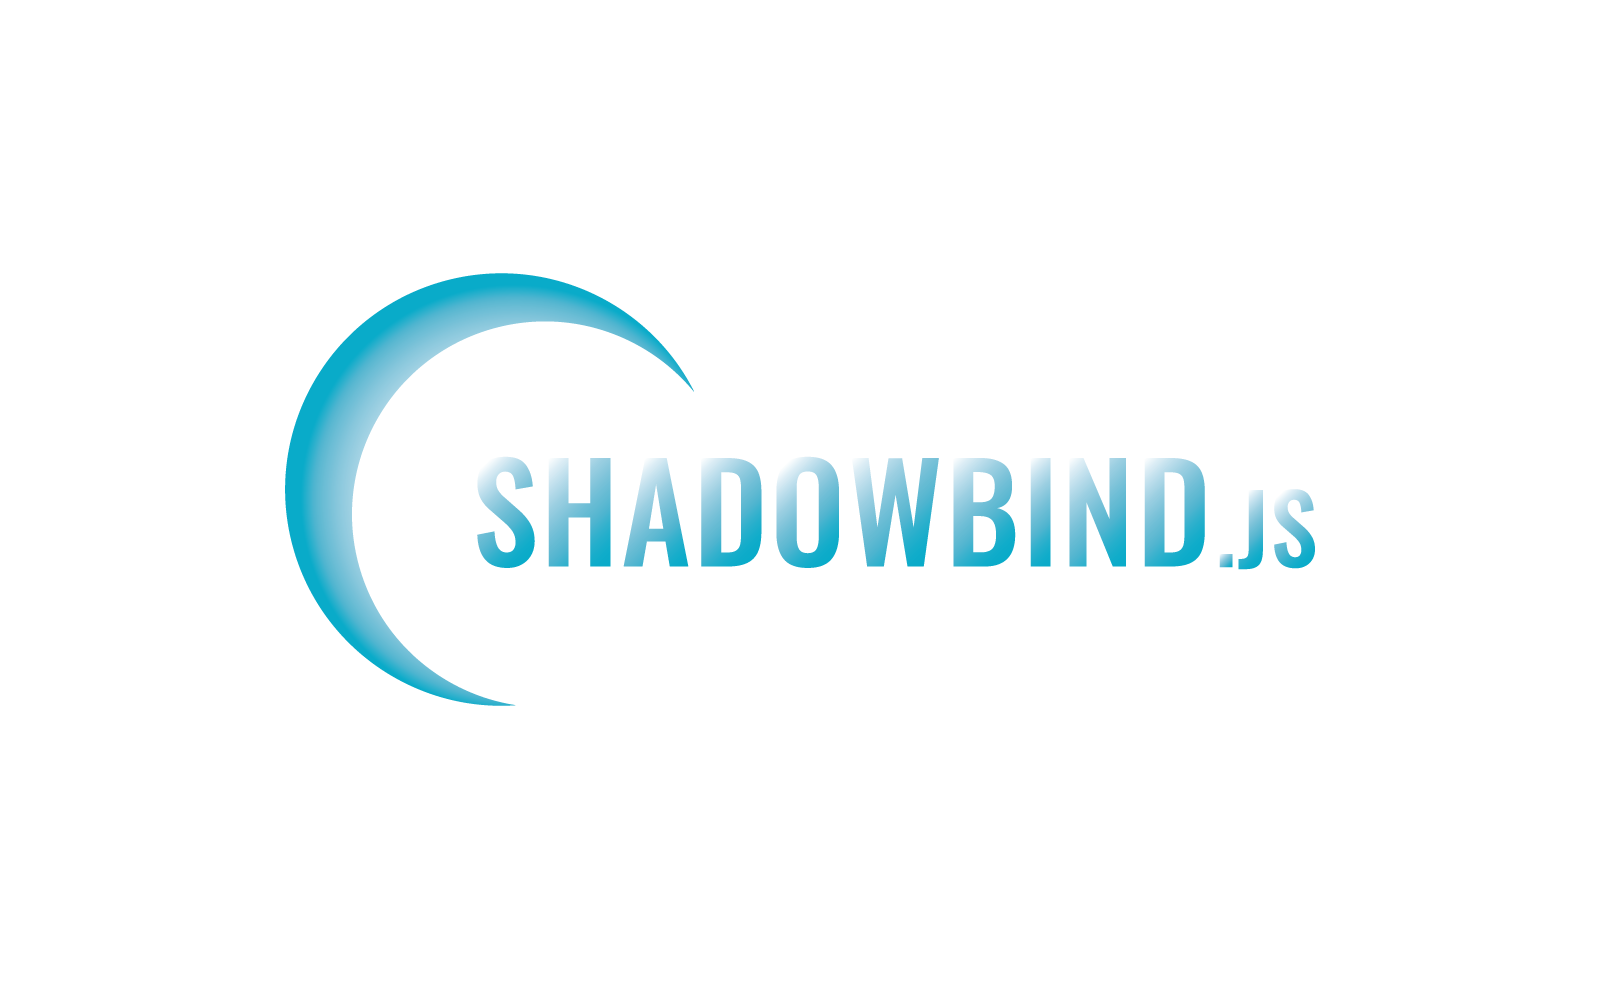 Shadowbind